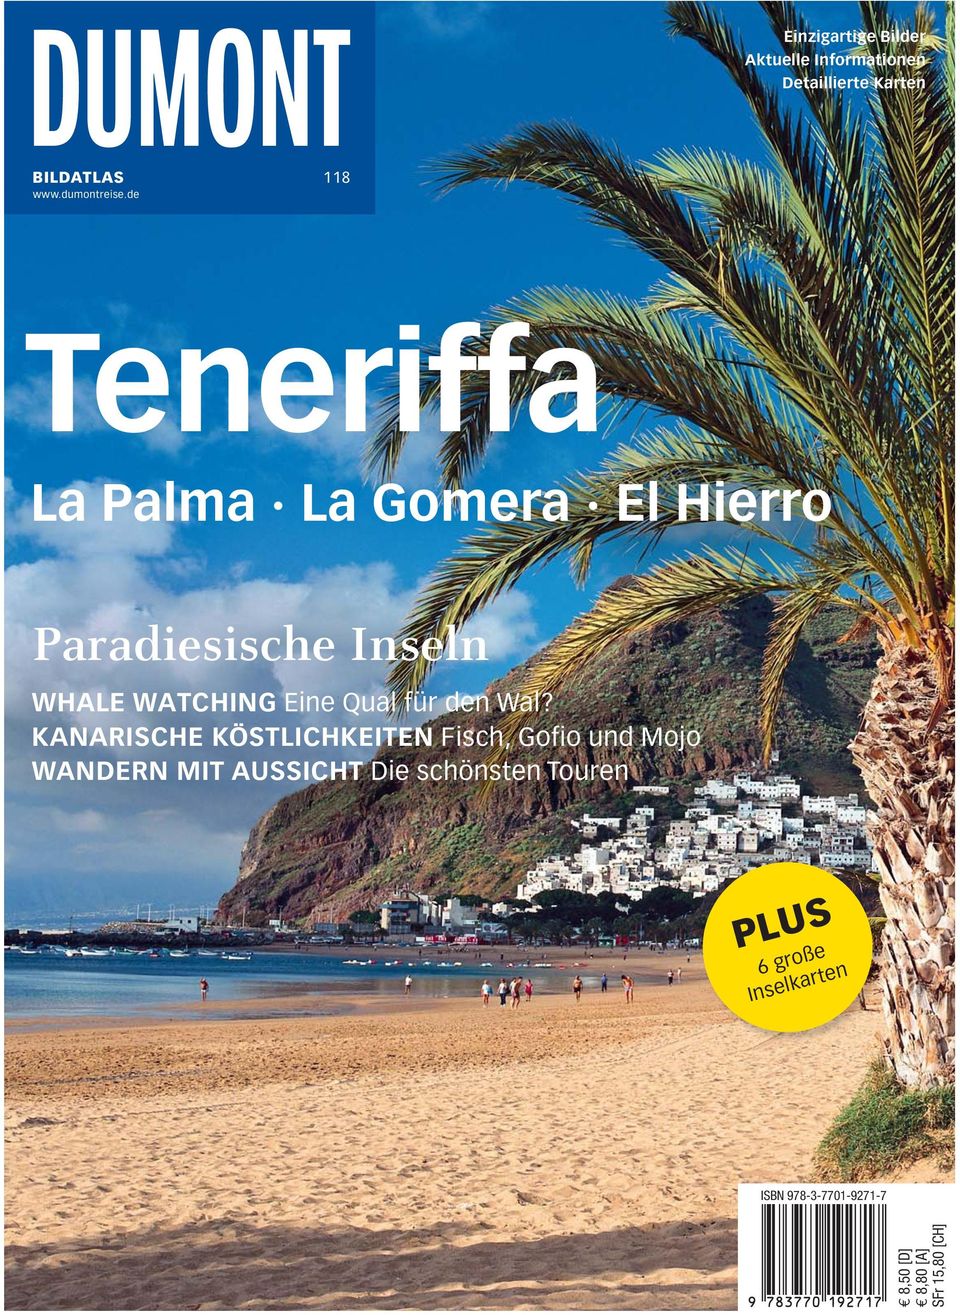 de Teneriffa La Palma La Gomera El Hierro Paradiesische Inseln WHALE WATCHING Eine Qual für